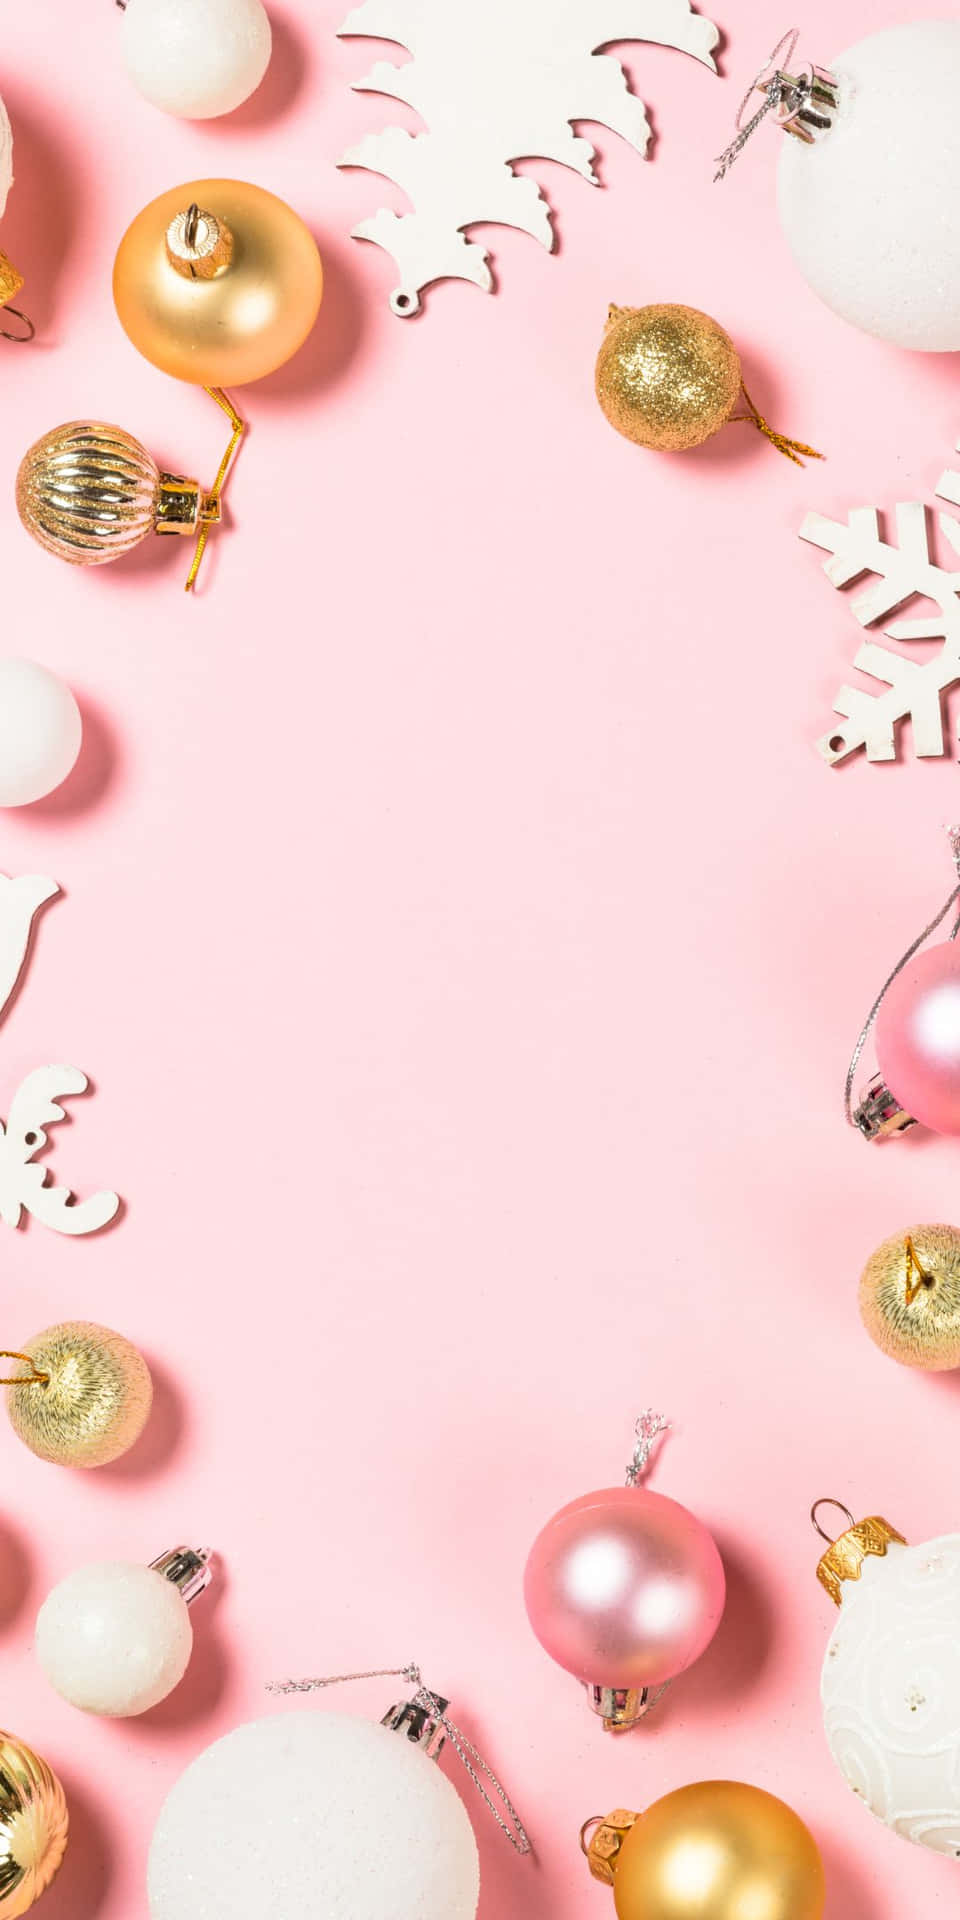 Celebrate Pink Christmas with Joy